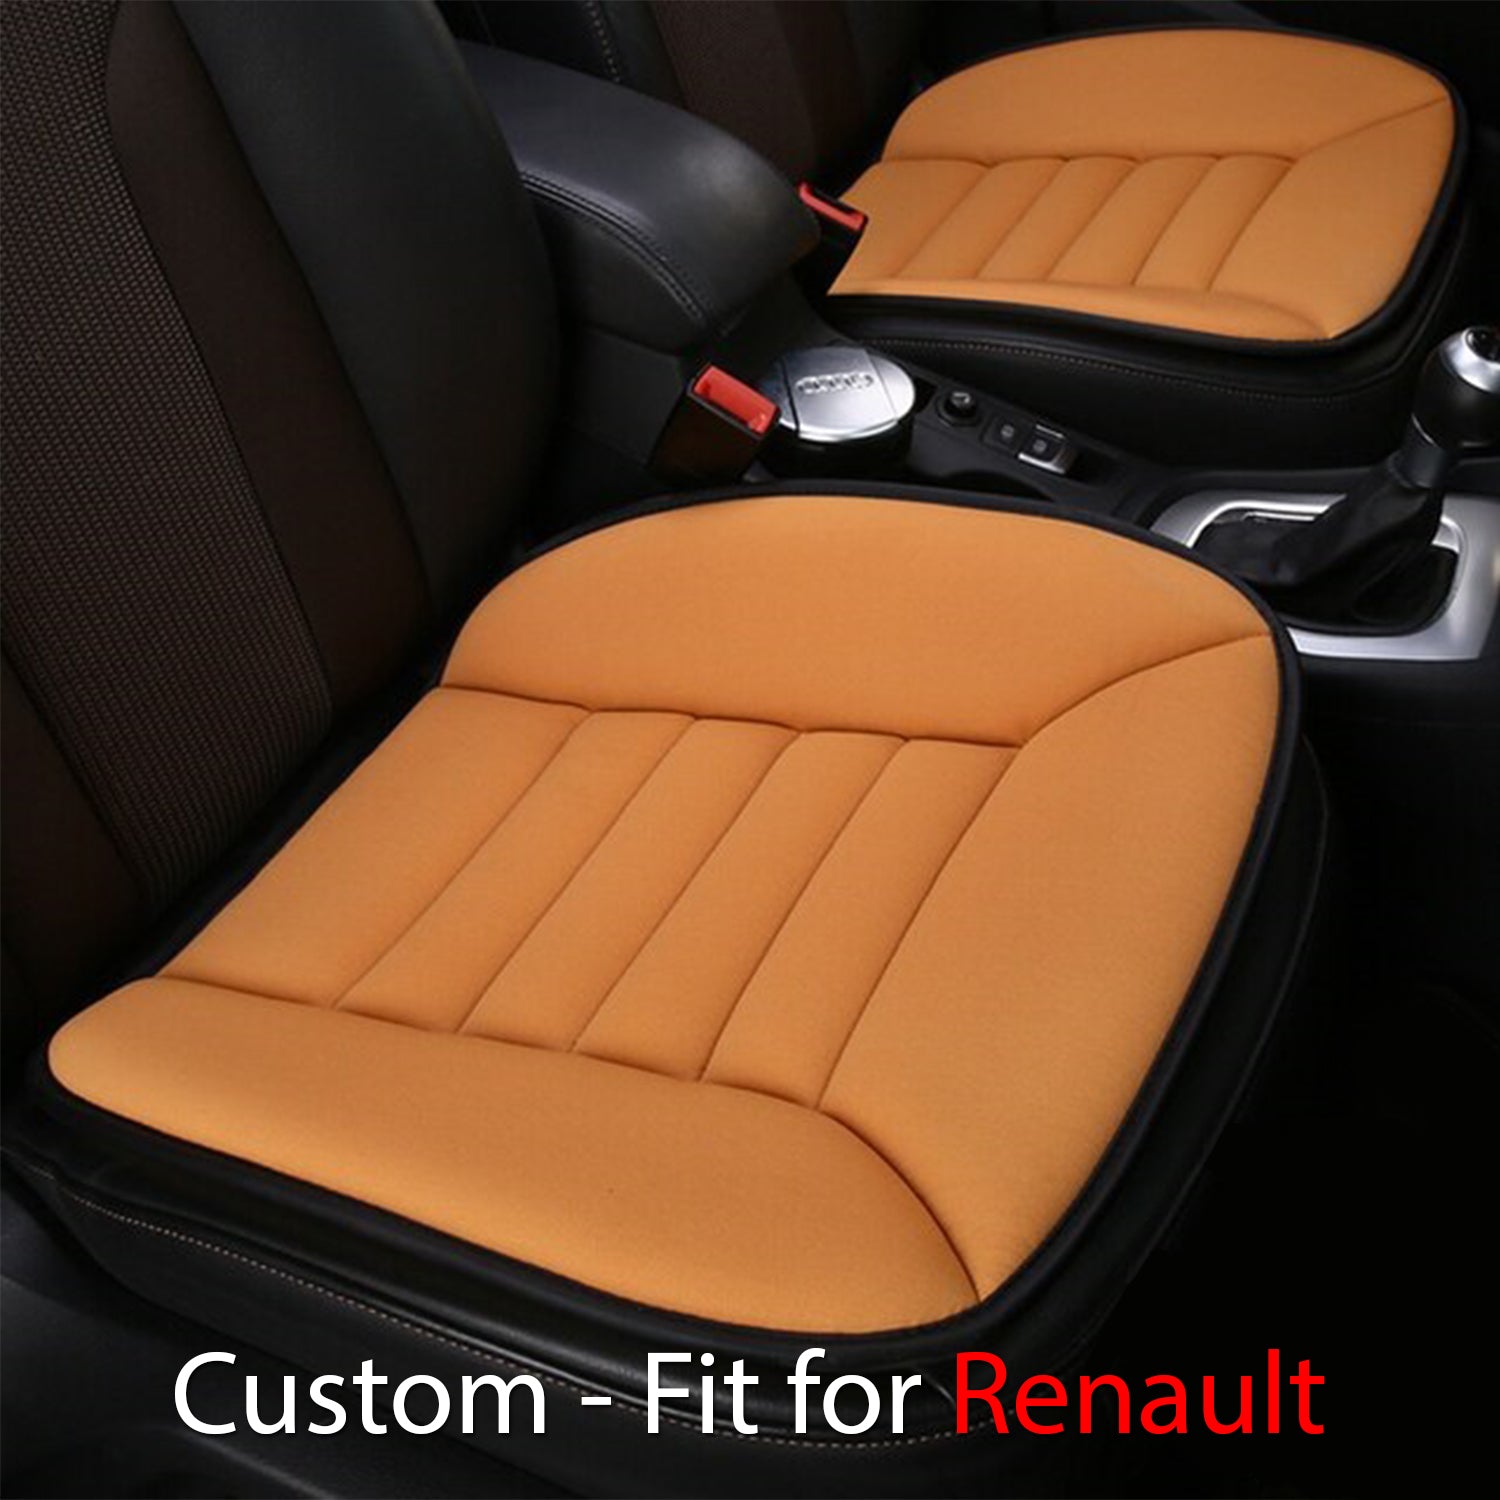 Car Seat Cushion with 1.2inch Comfort Memory Foam, Custom-Fit For Car, Seat Cushion for Car and Office Chair DLSA247